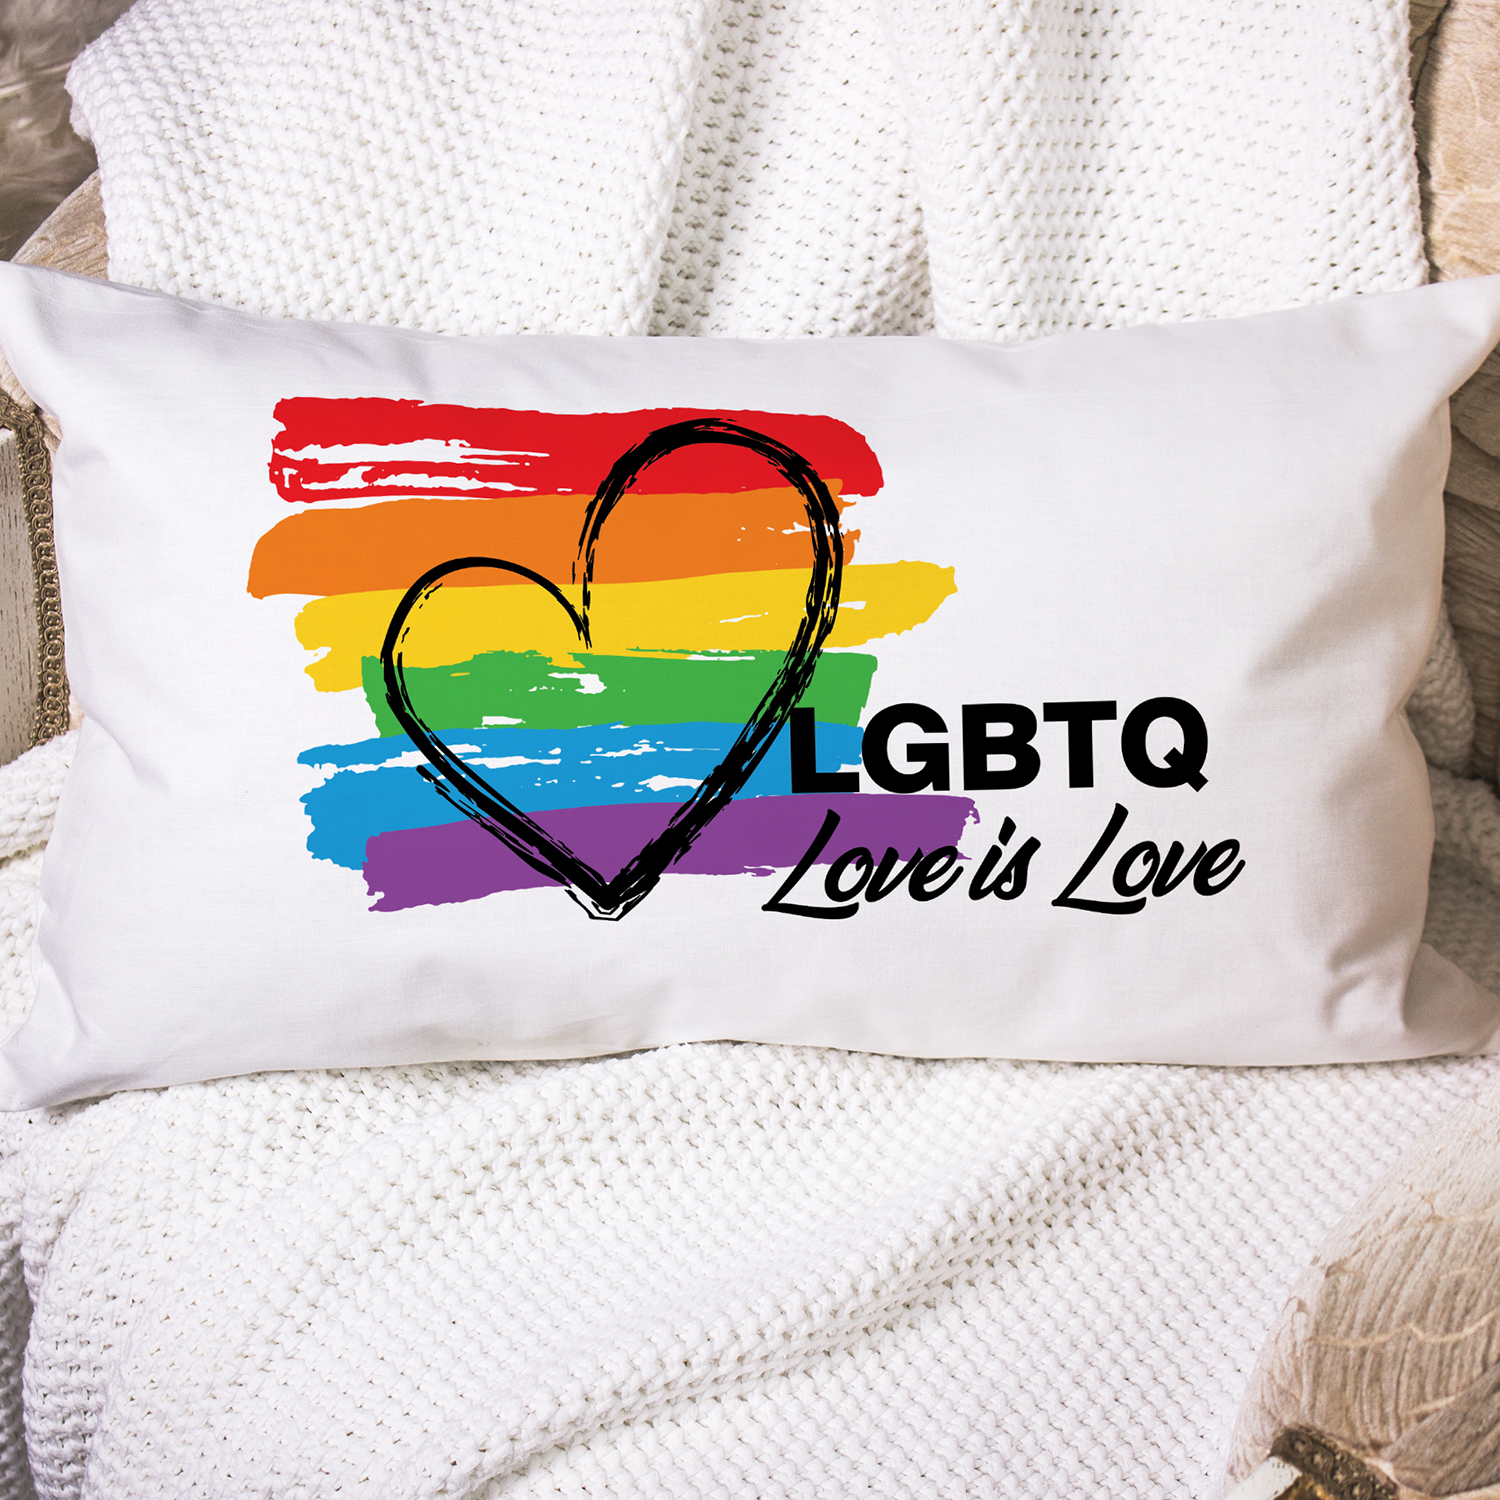 LGBTQ love is love svg preview.